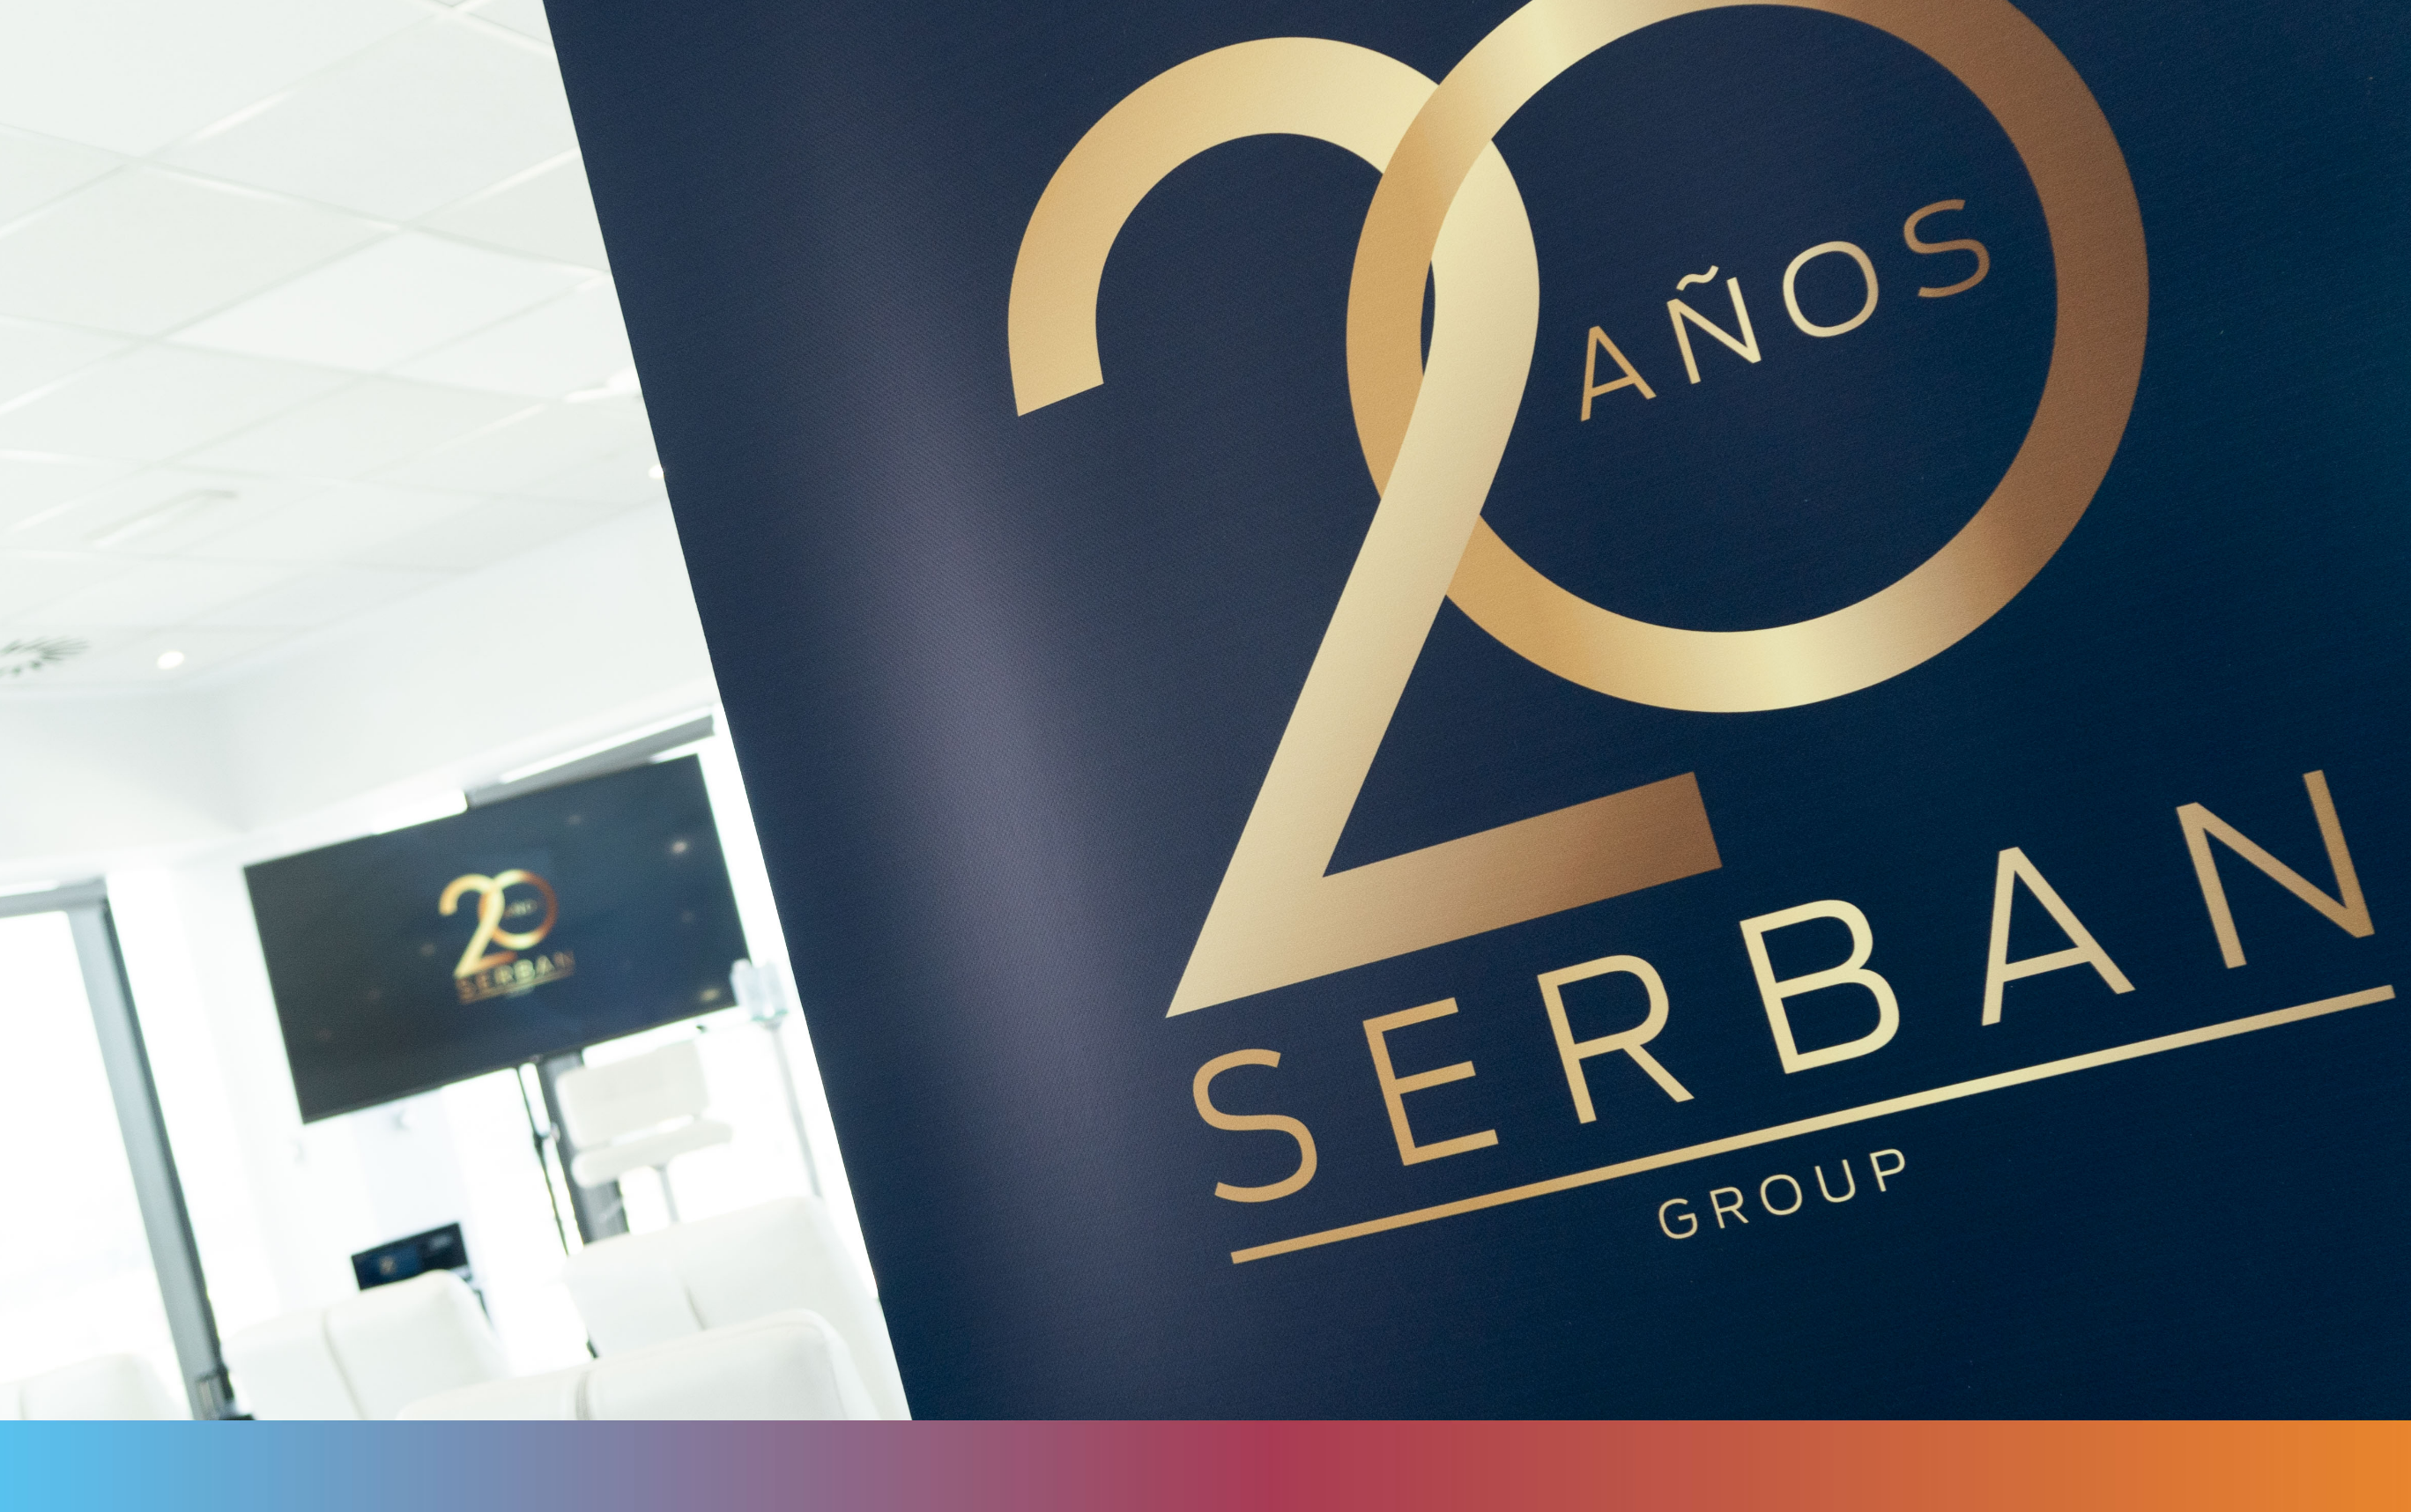 20 aniversario, evento serban group